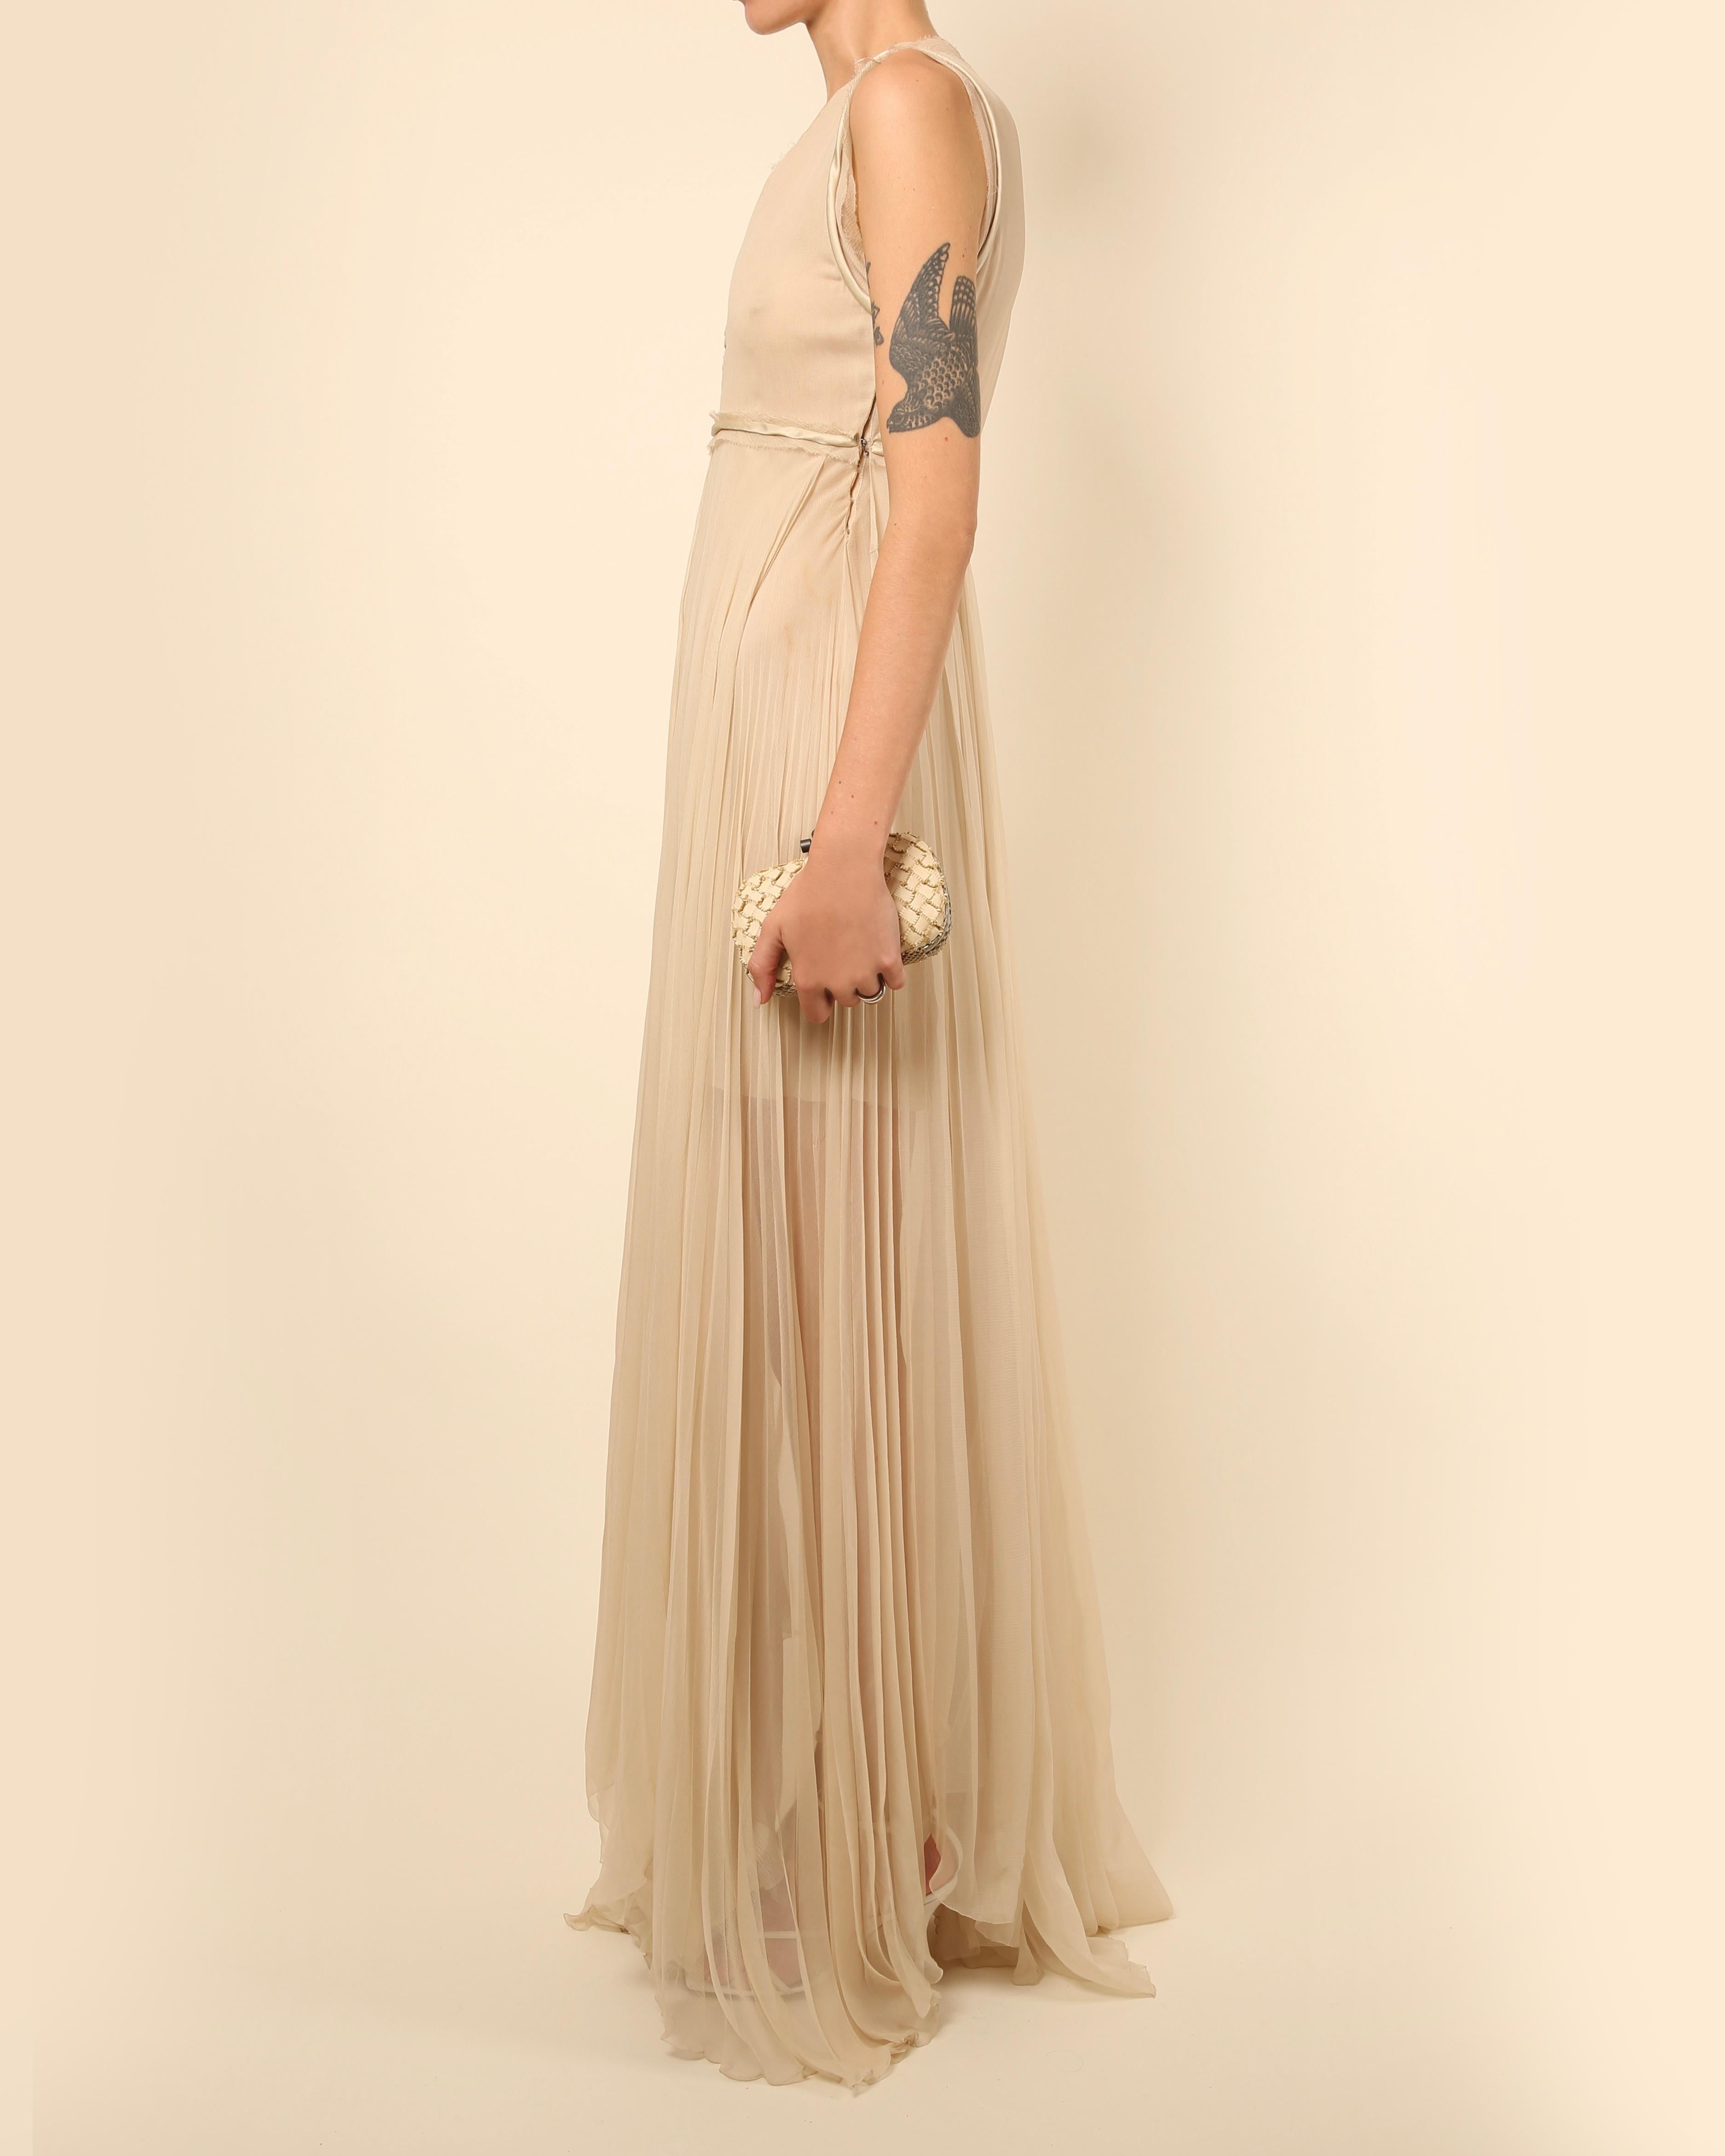 Chloe S/S10 ivory white beige chiffon silk layered sleeveless wedding dress gown For Sale 6